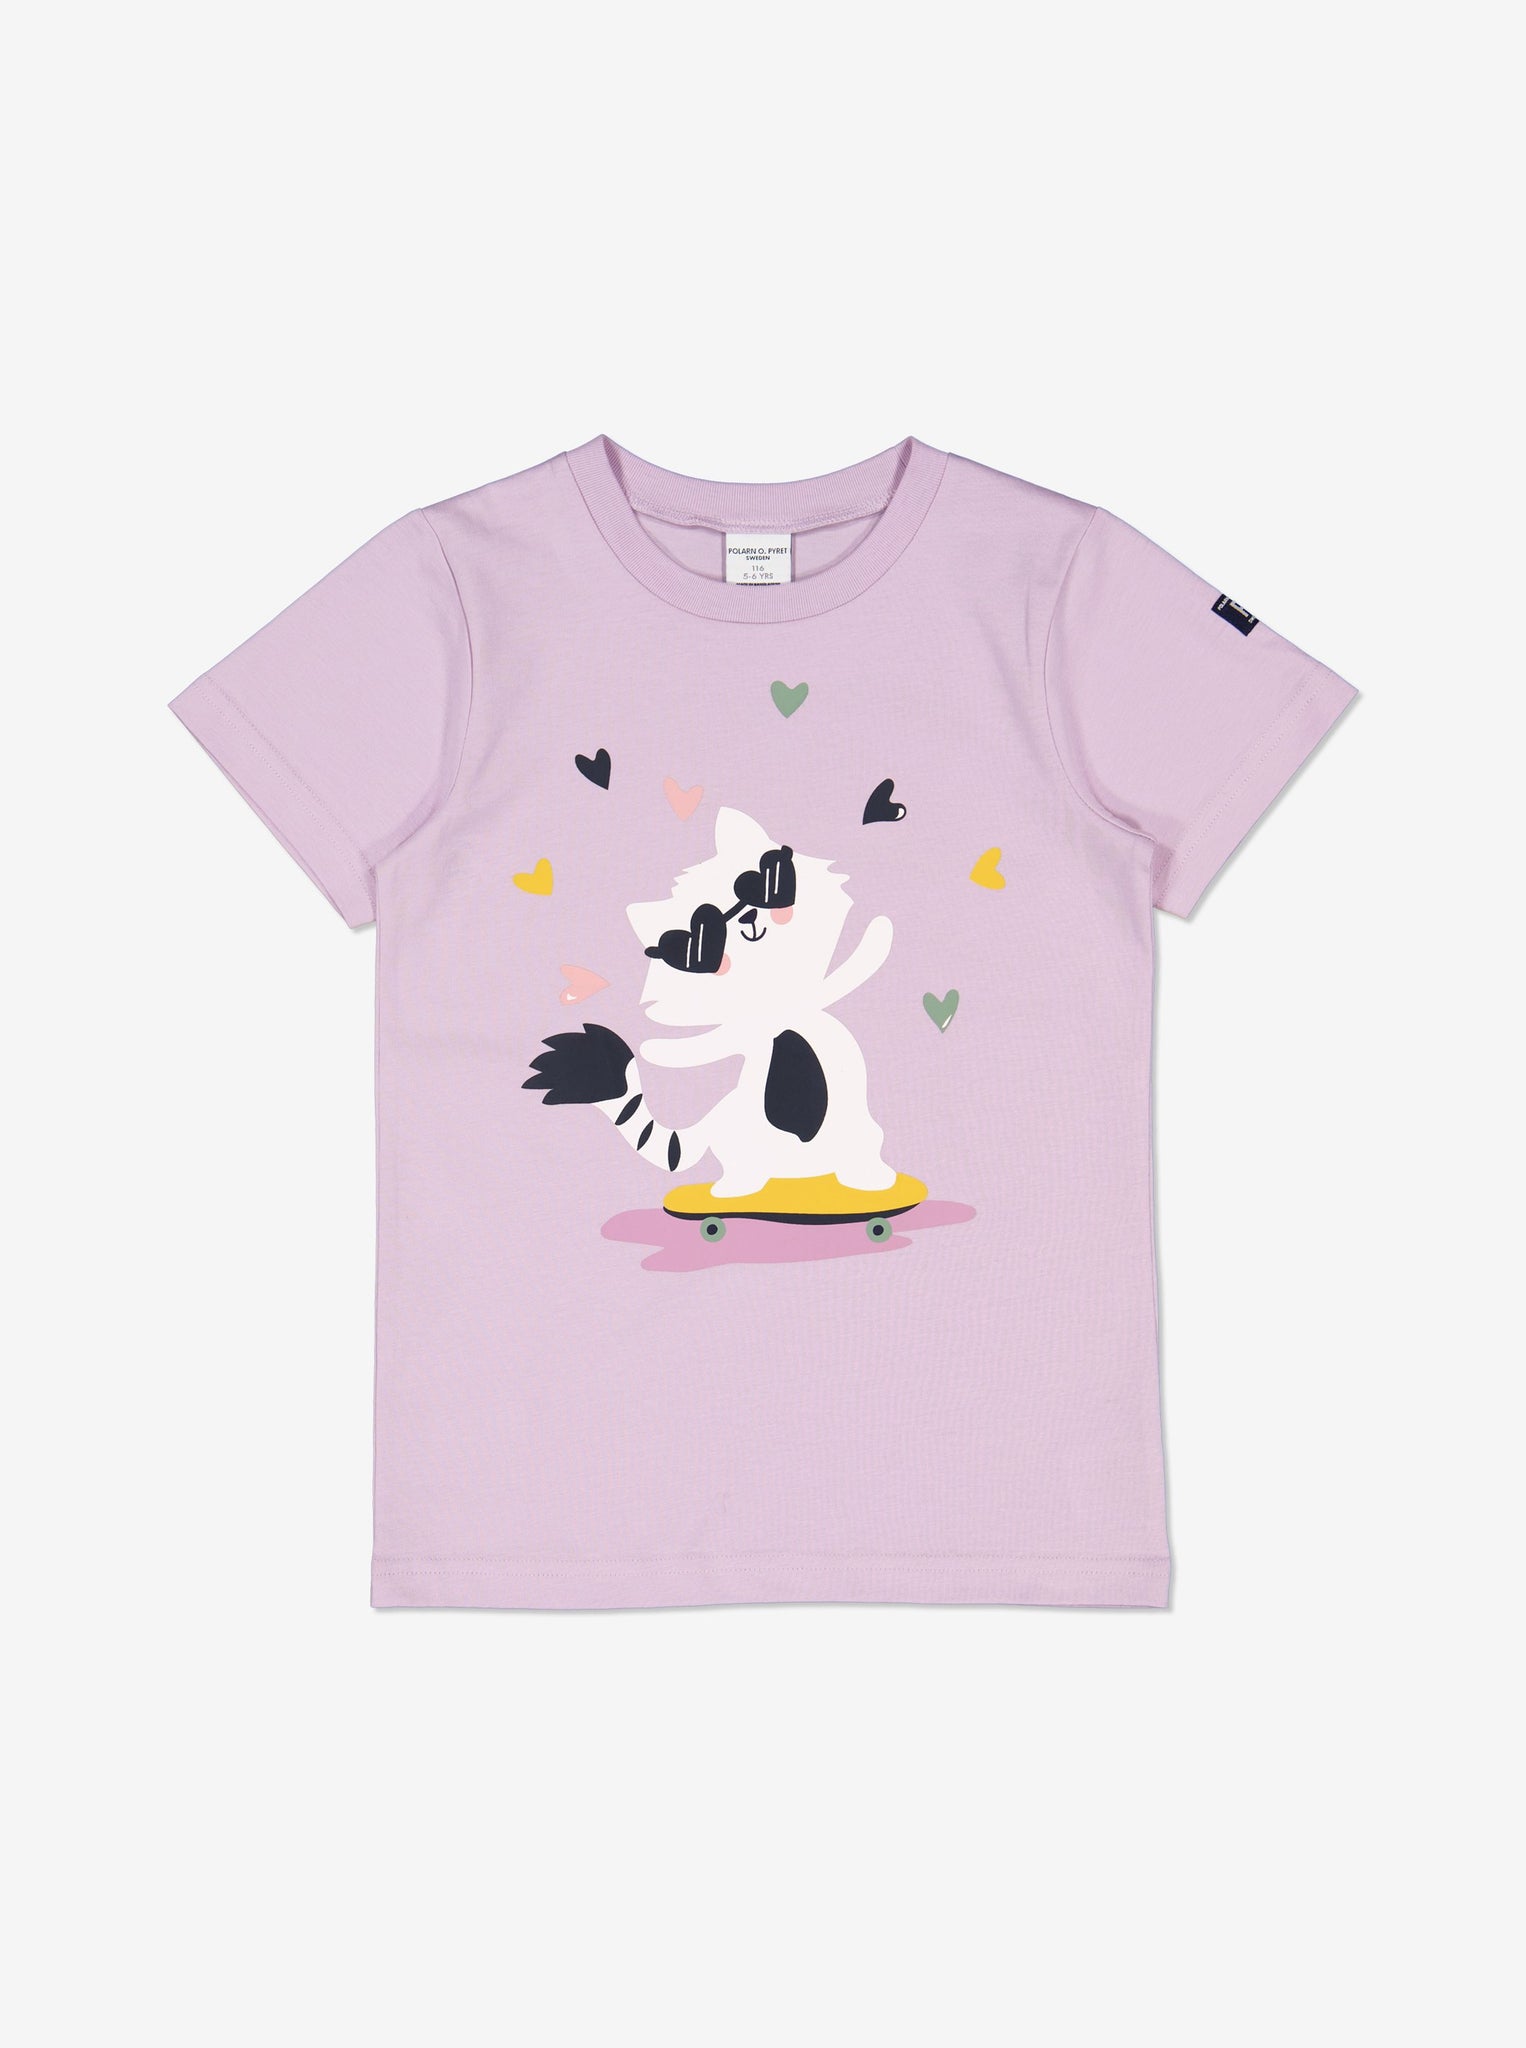  Organic Purple Cat Print Kids T-Shirt from Polarn O. Pyret Kidswear. Made with 100% organic cotton.